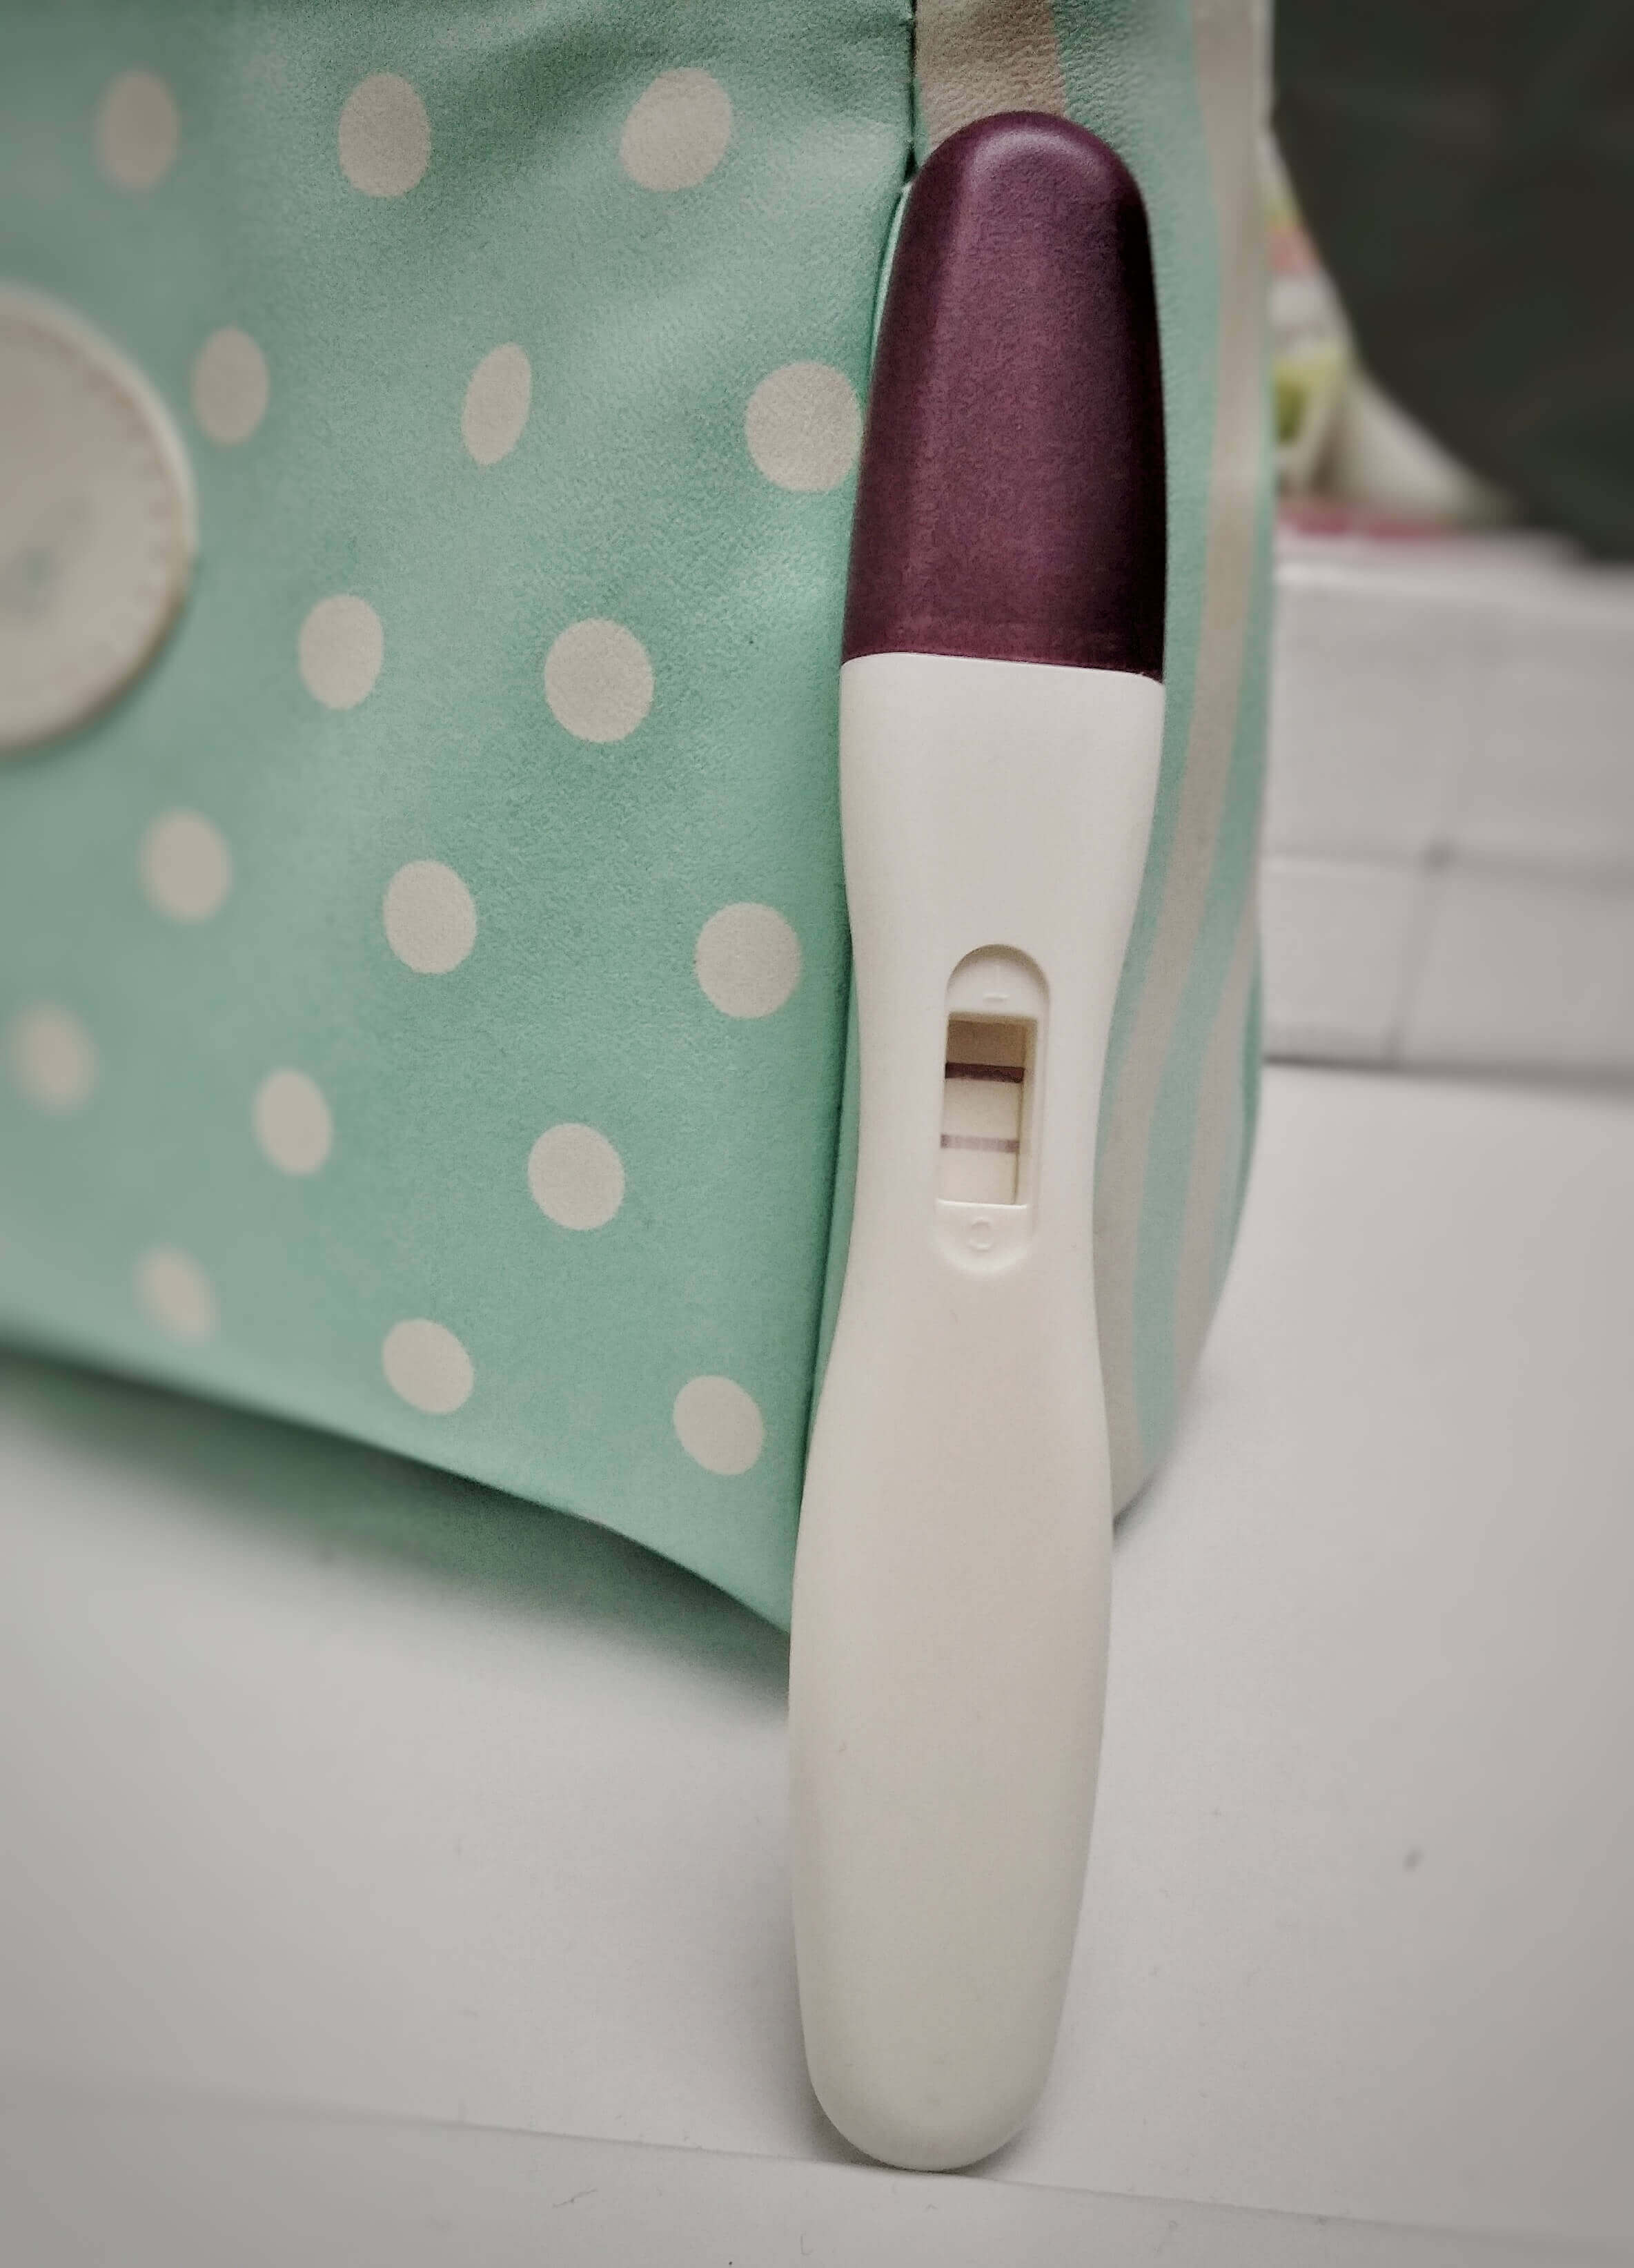 Dm schwangerschaftstest clearblue Schwangerschaftstests günstig